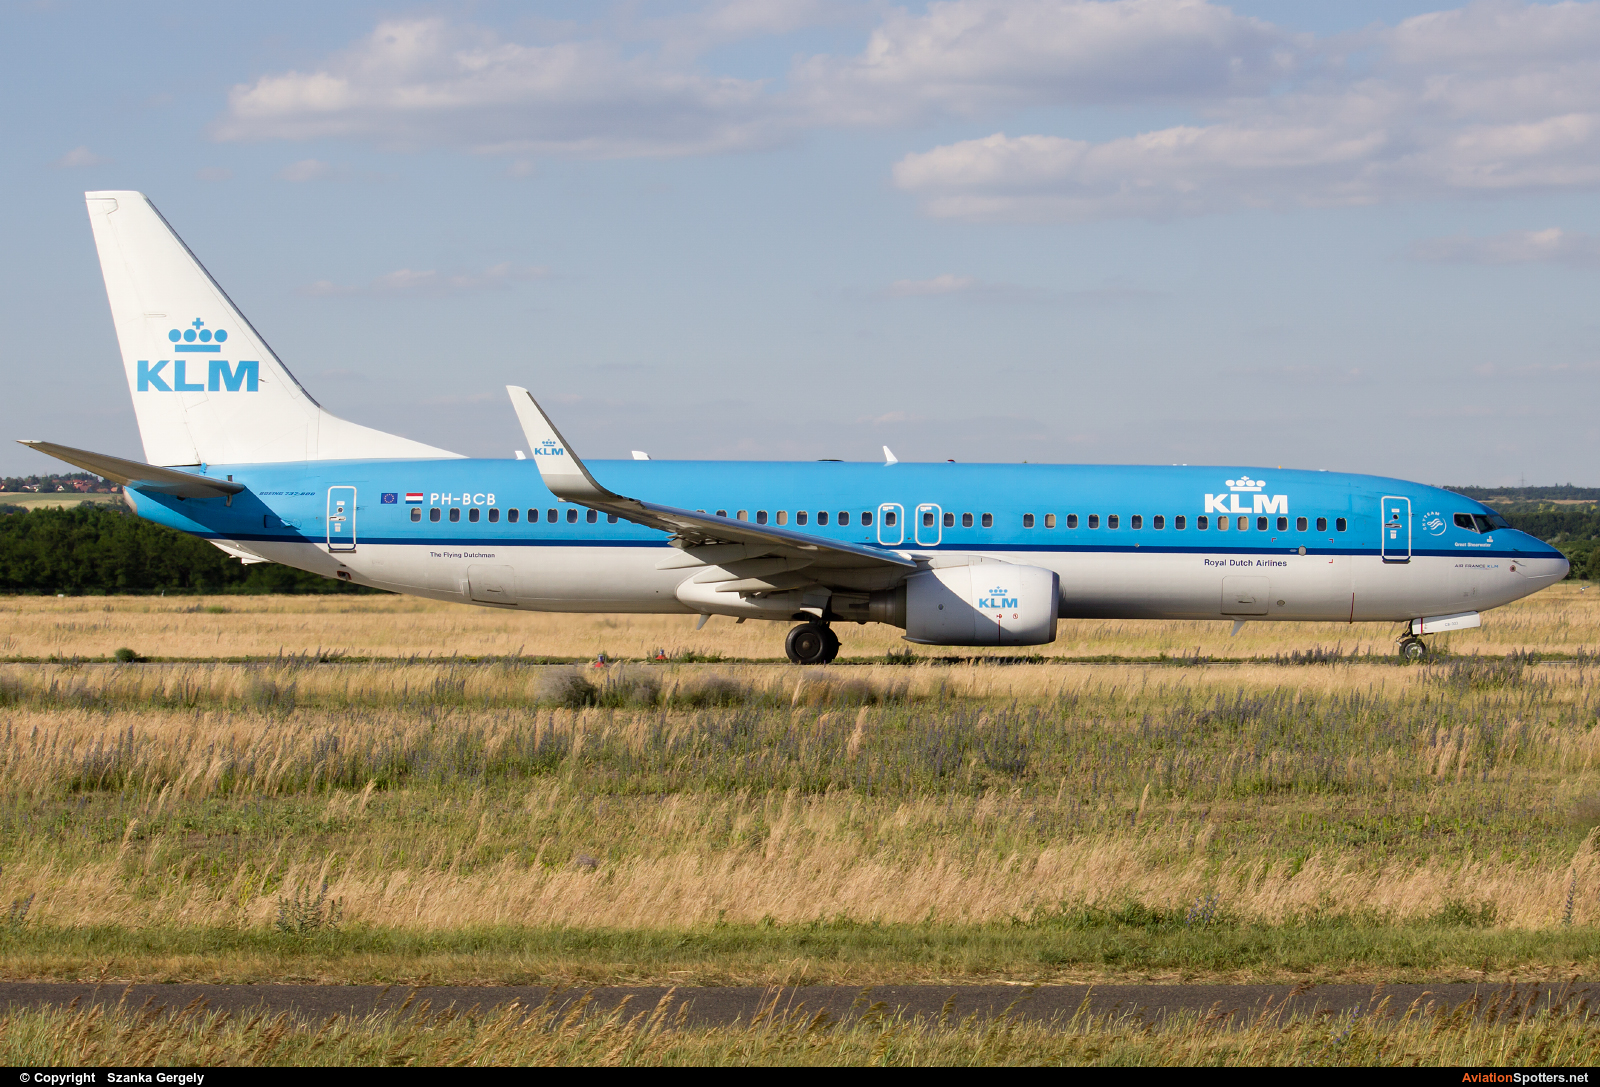 KLM  -  737-800  (PH-BCB) By Szanka Gergely (TaxisGeri)